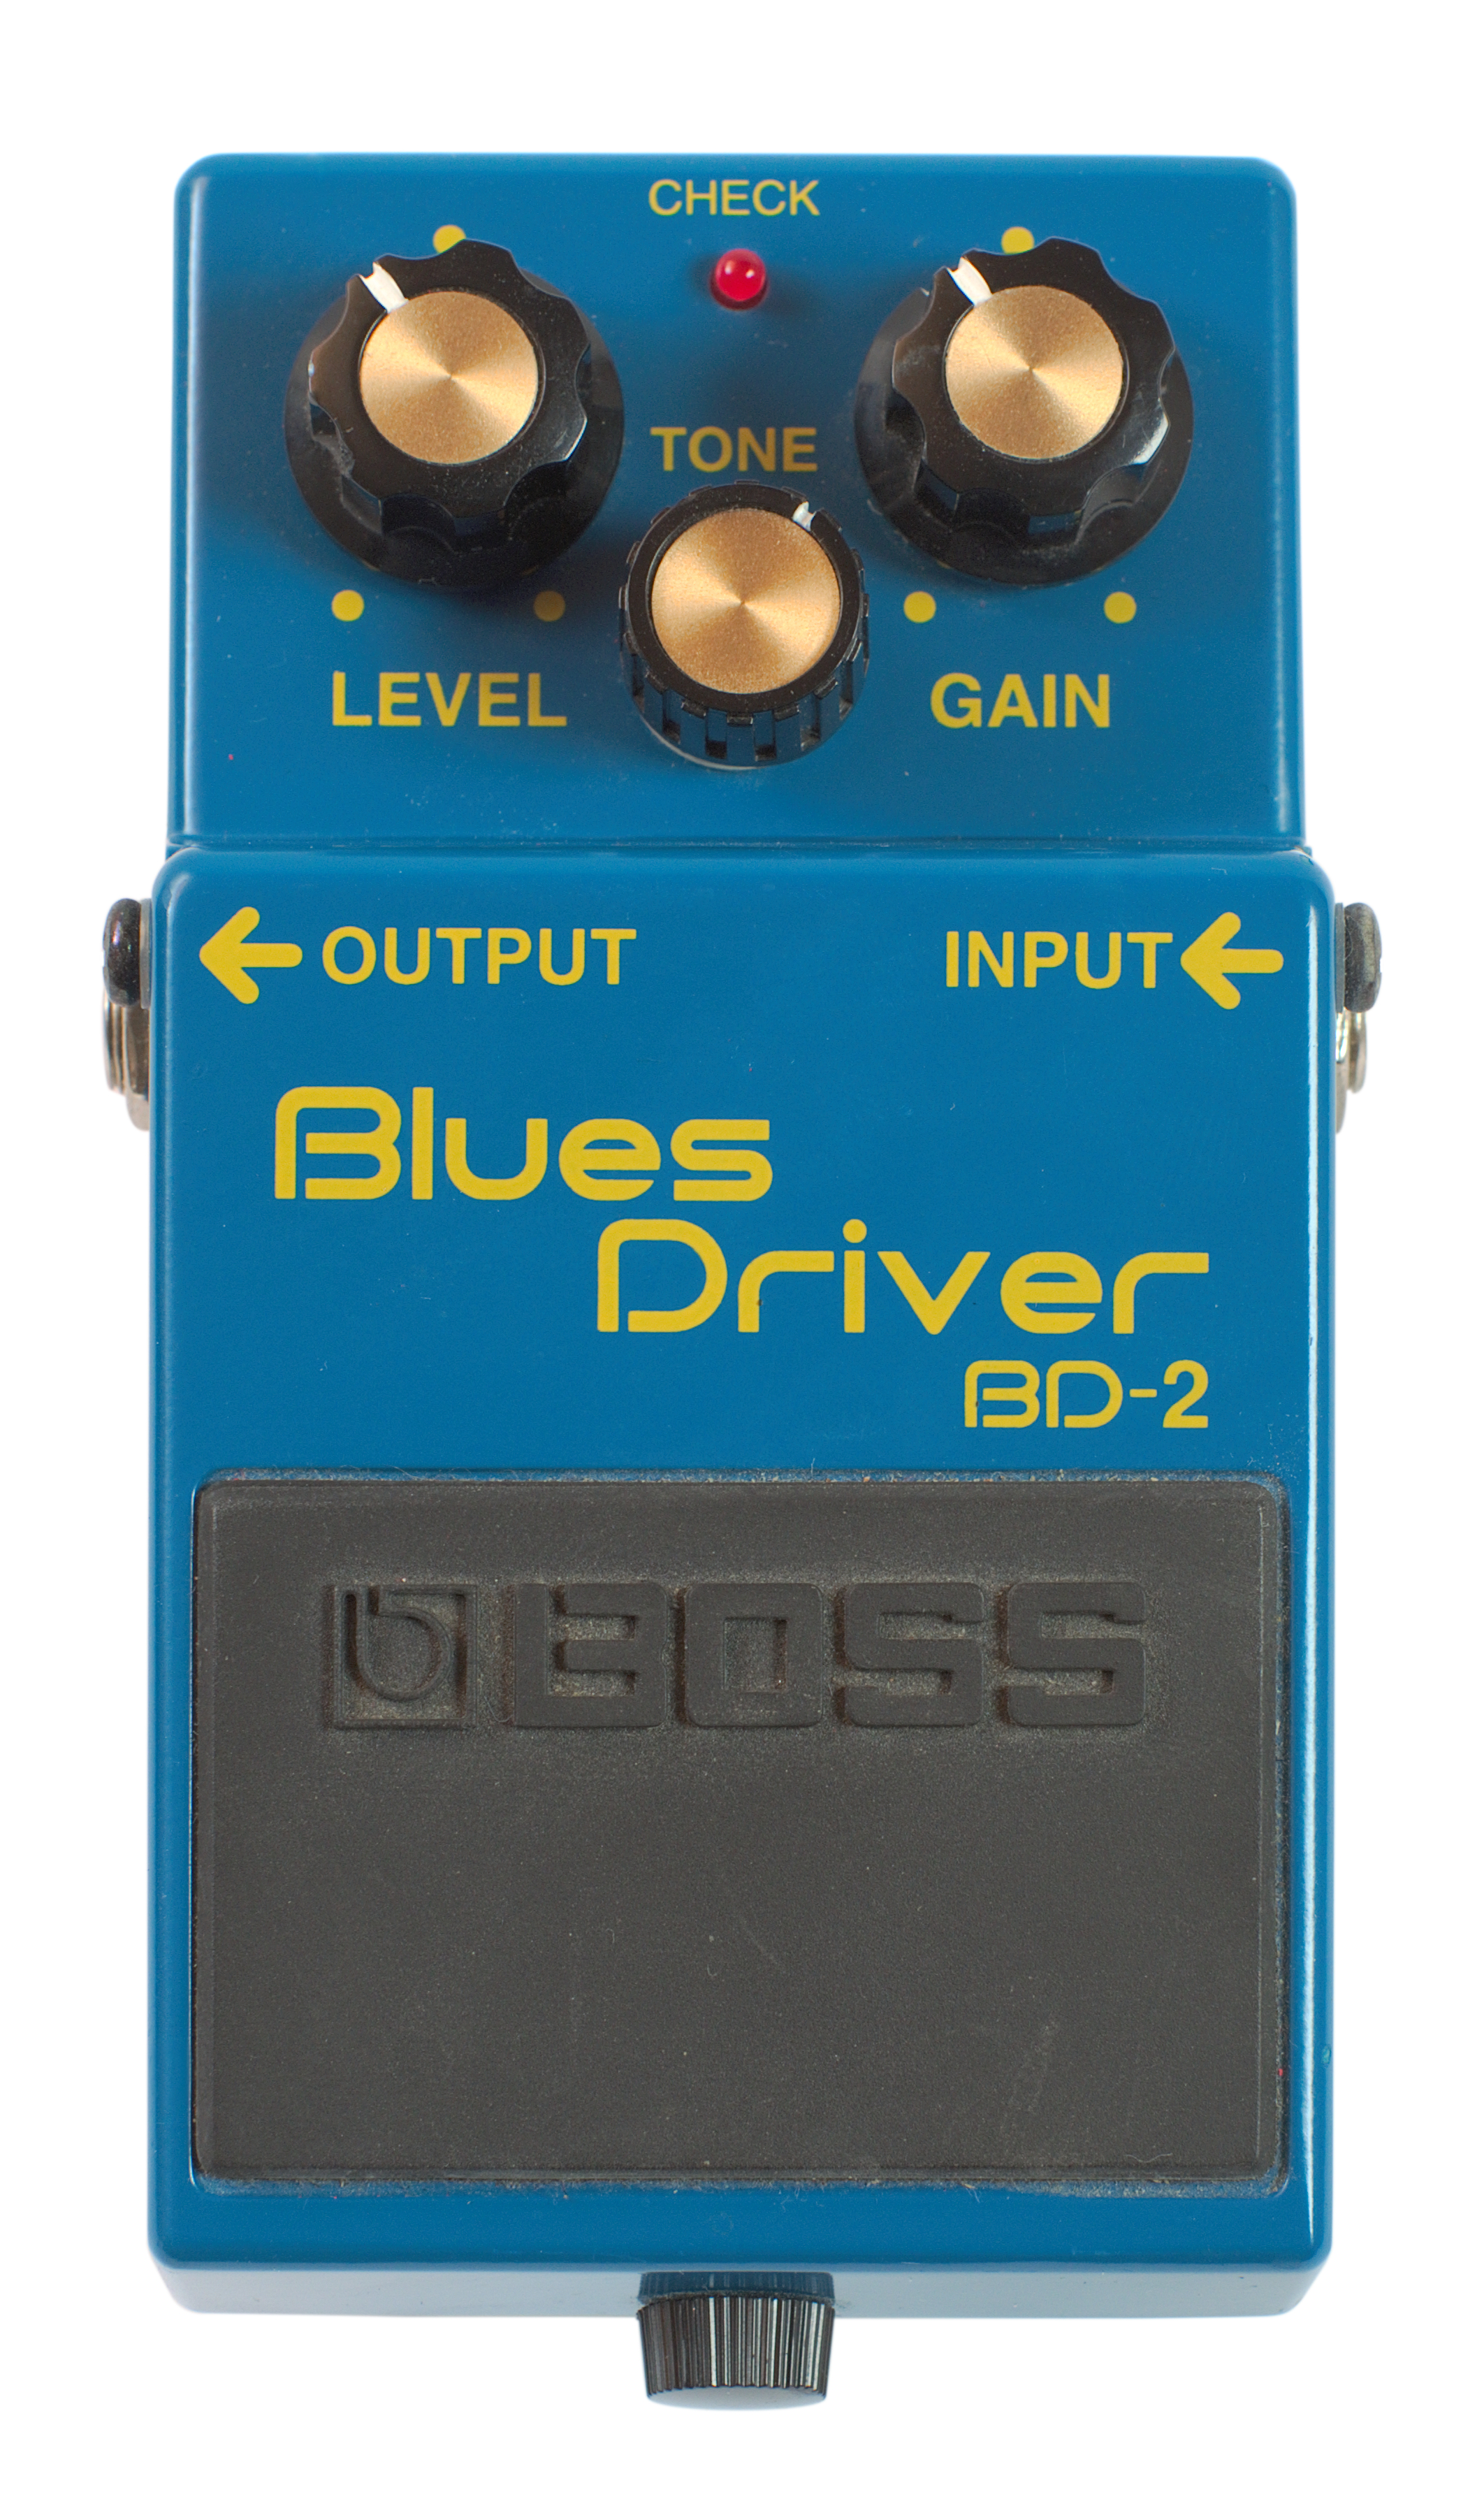 BOSS Blues Driver BD-2 top view